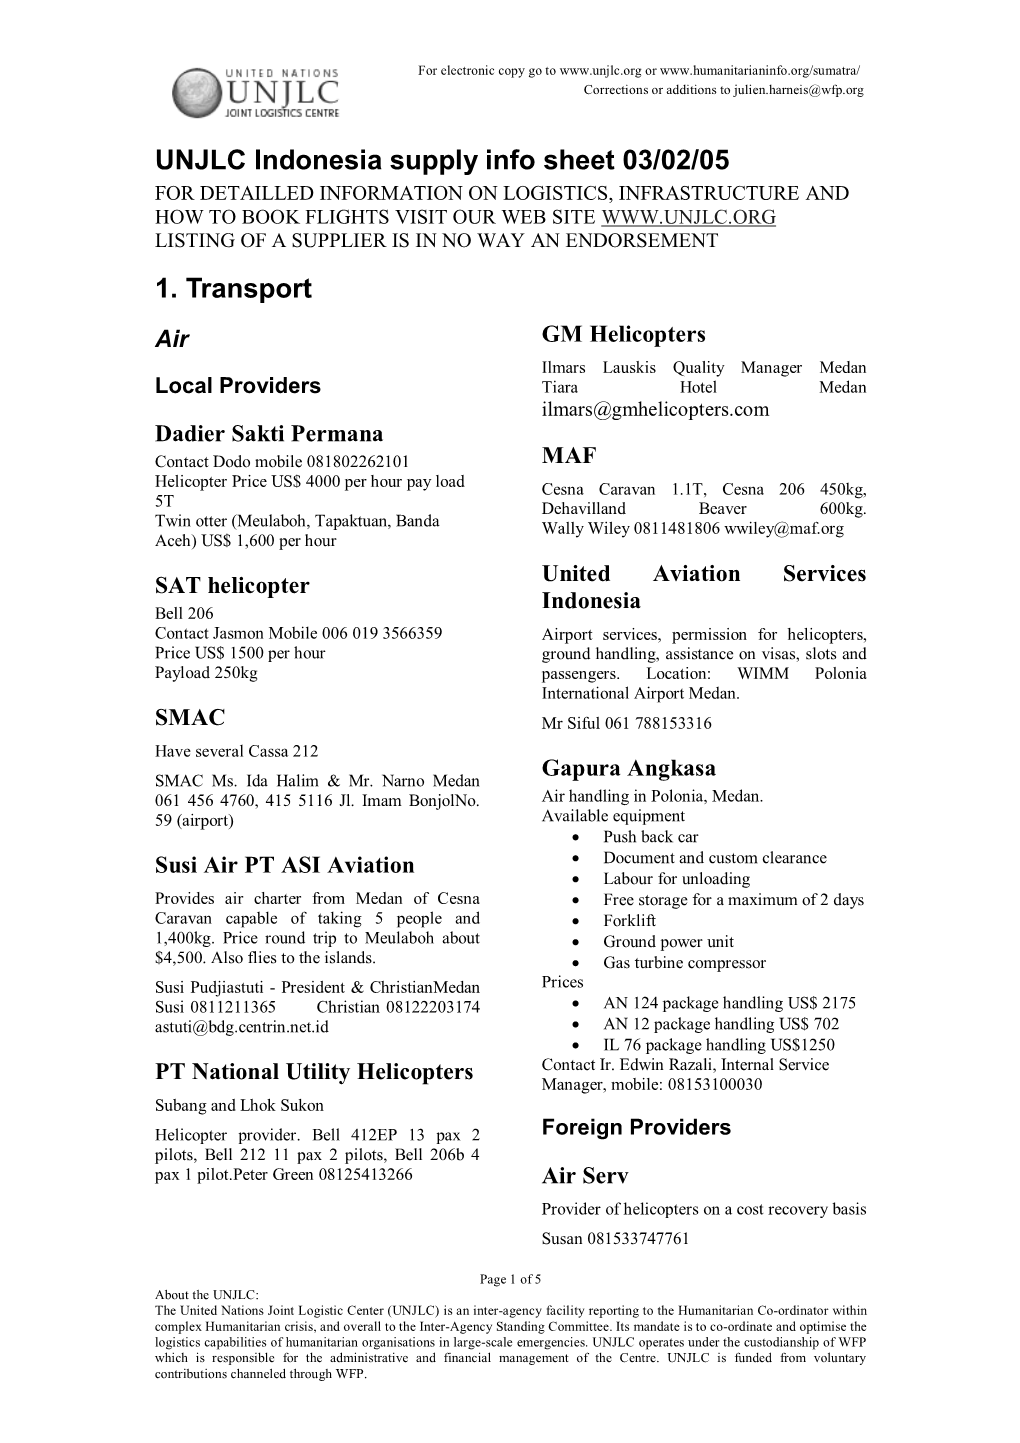 UNJLC Indonesia Supply Info Sheet 03/02/05 1. Transport